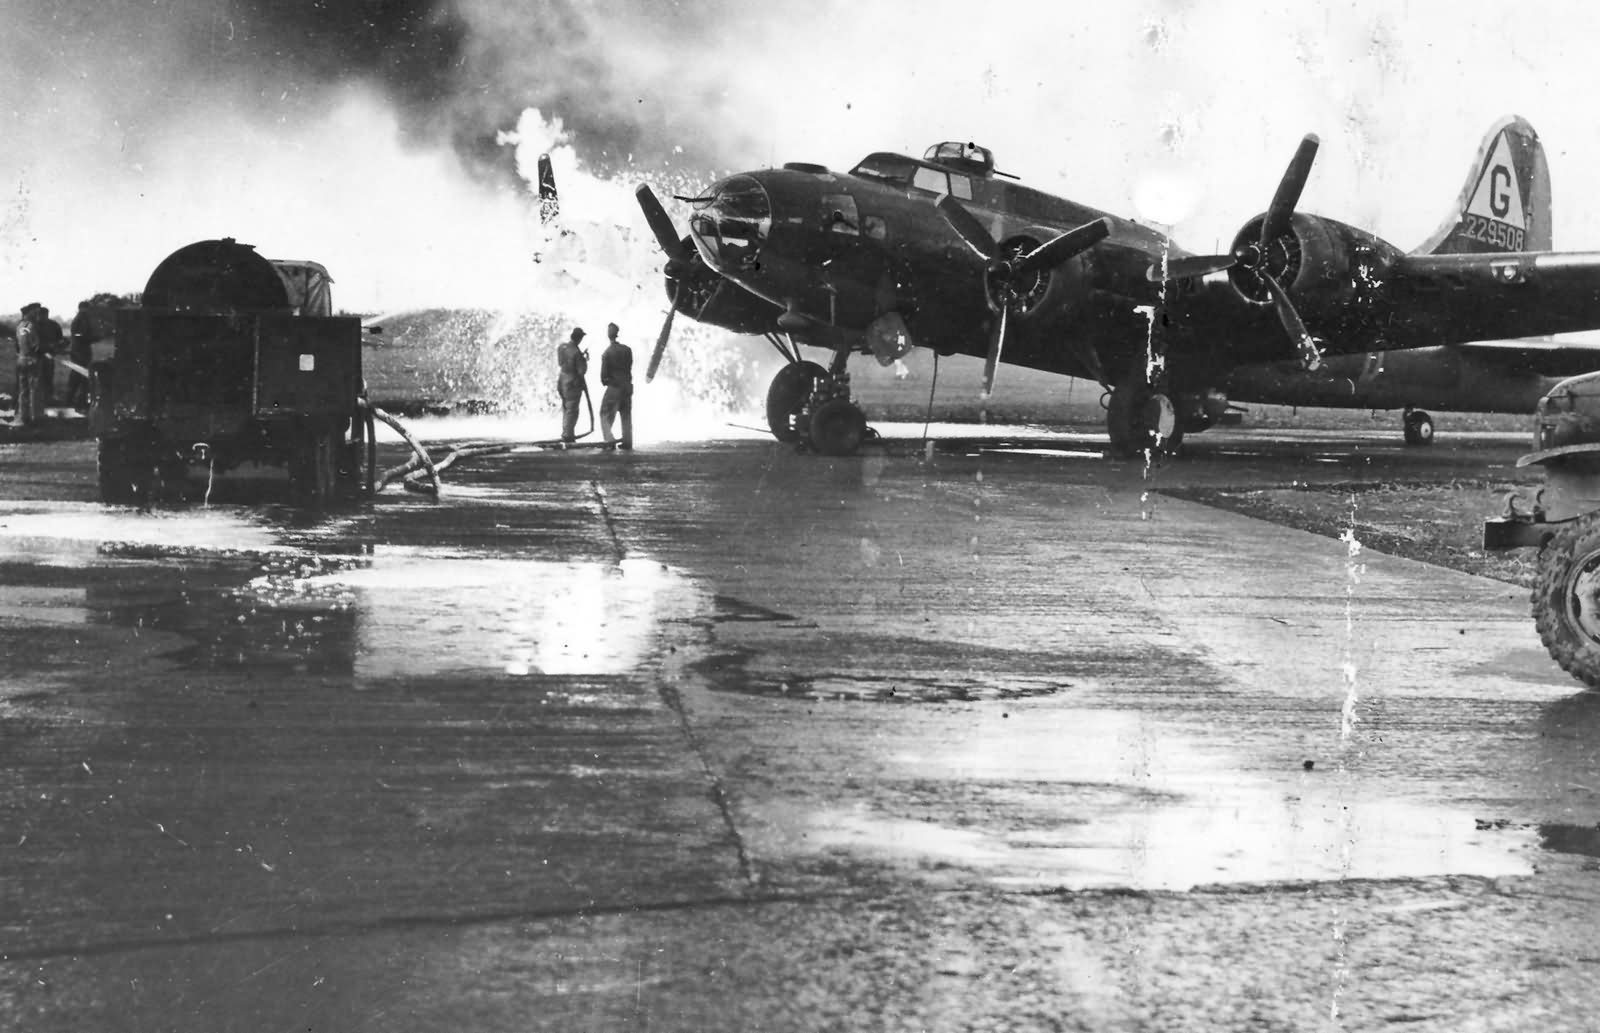 305th_Bomb_Group_B-17F_Fire_at_Chelveston_England_August_1943_42-29508.jpg